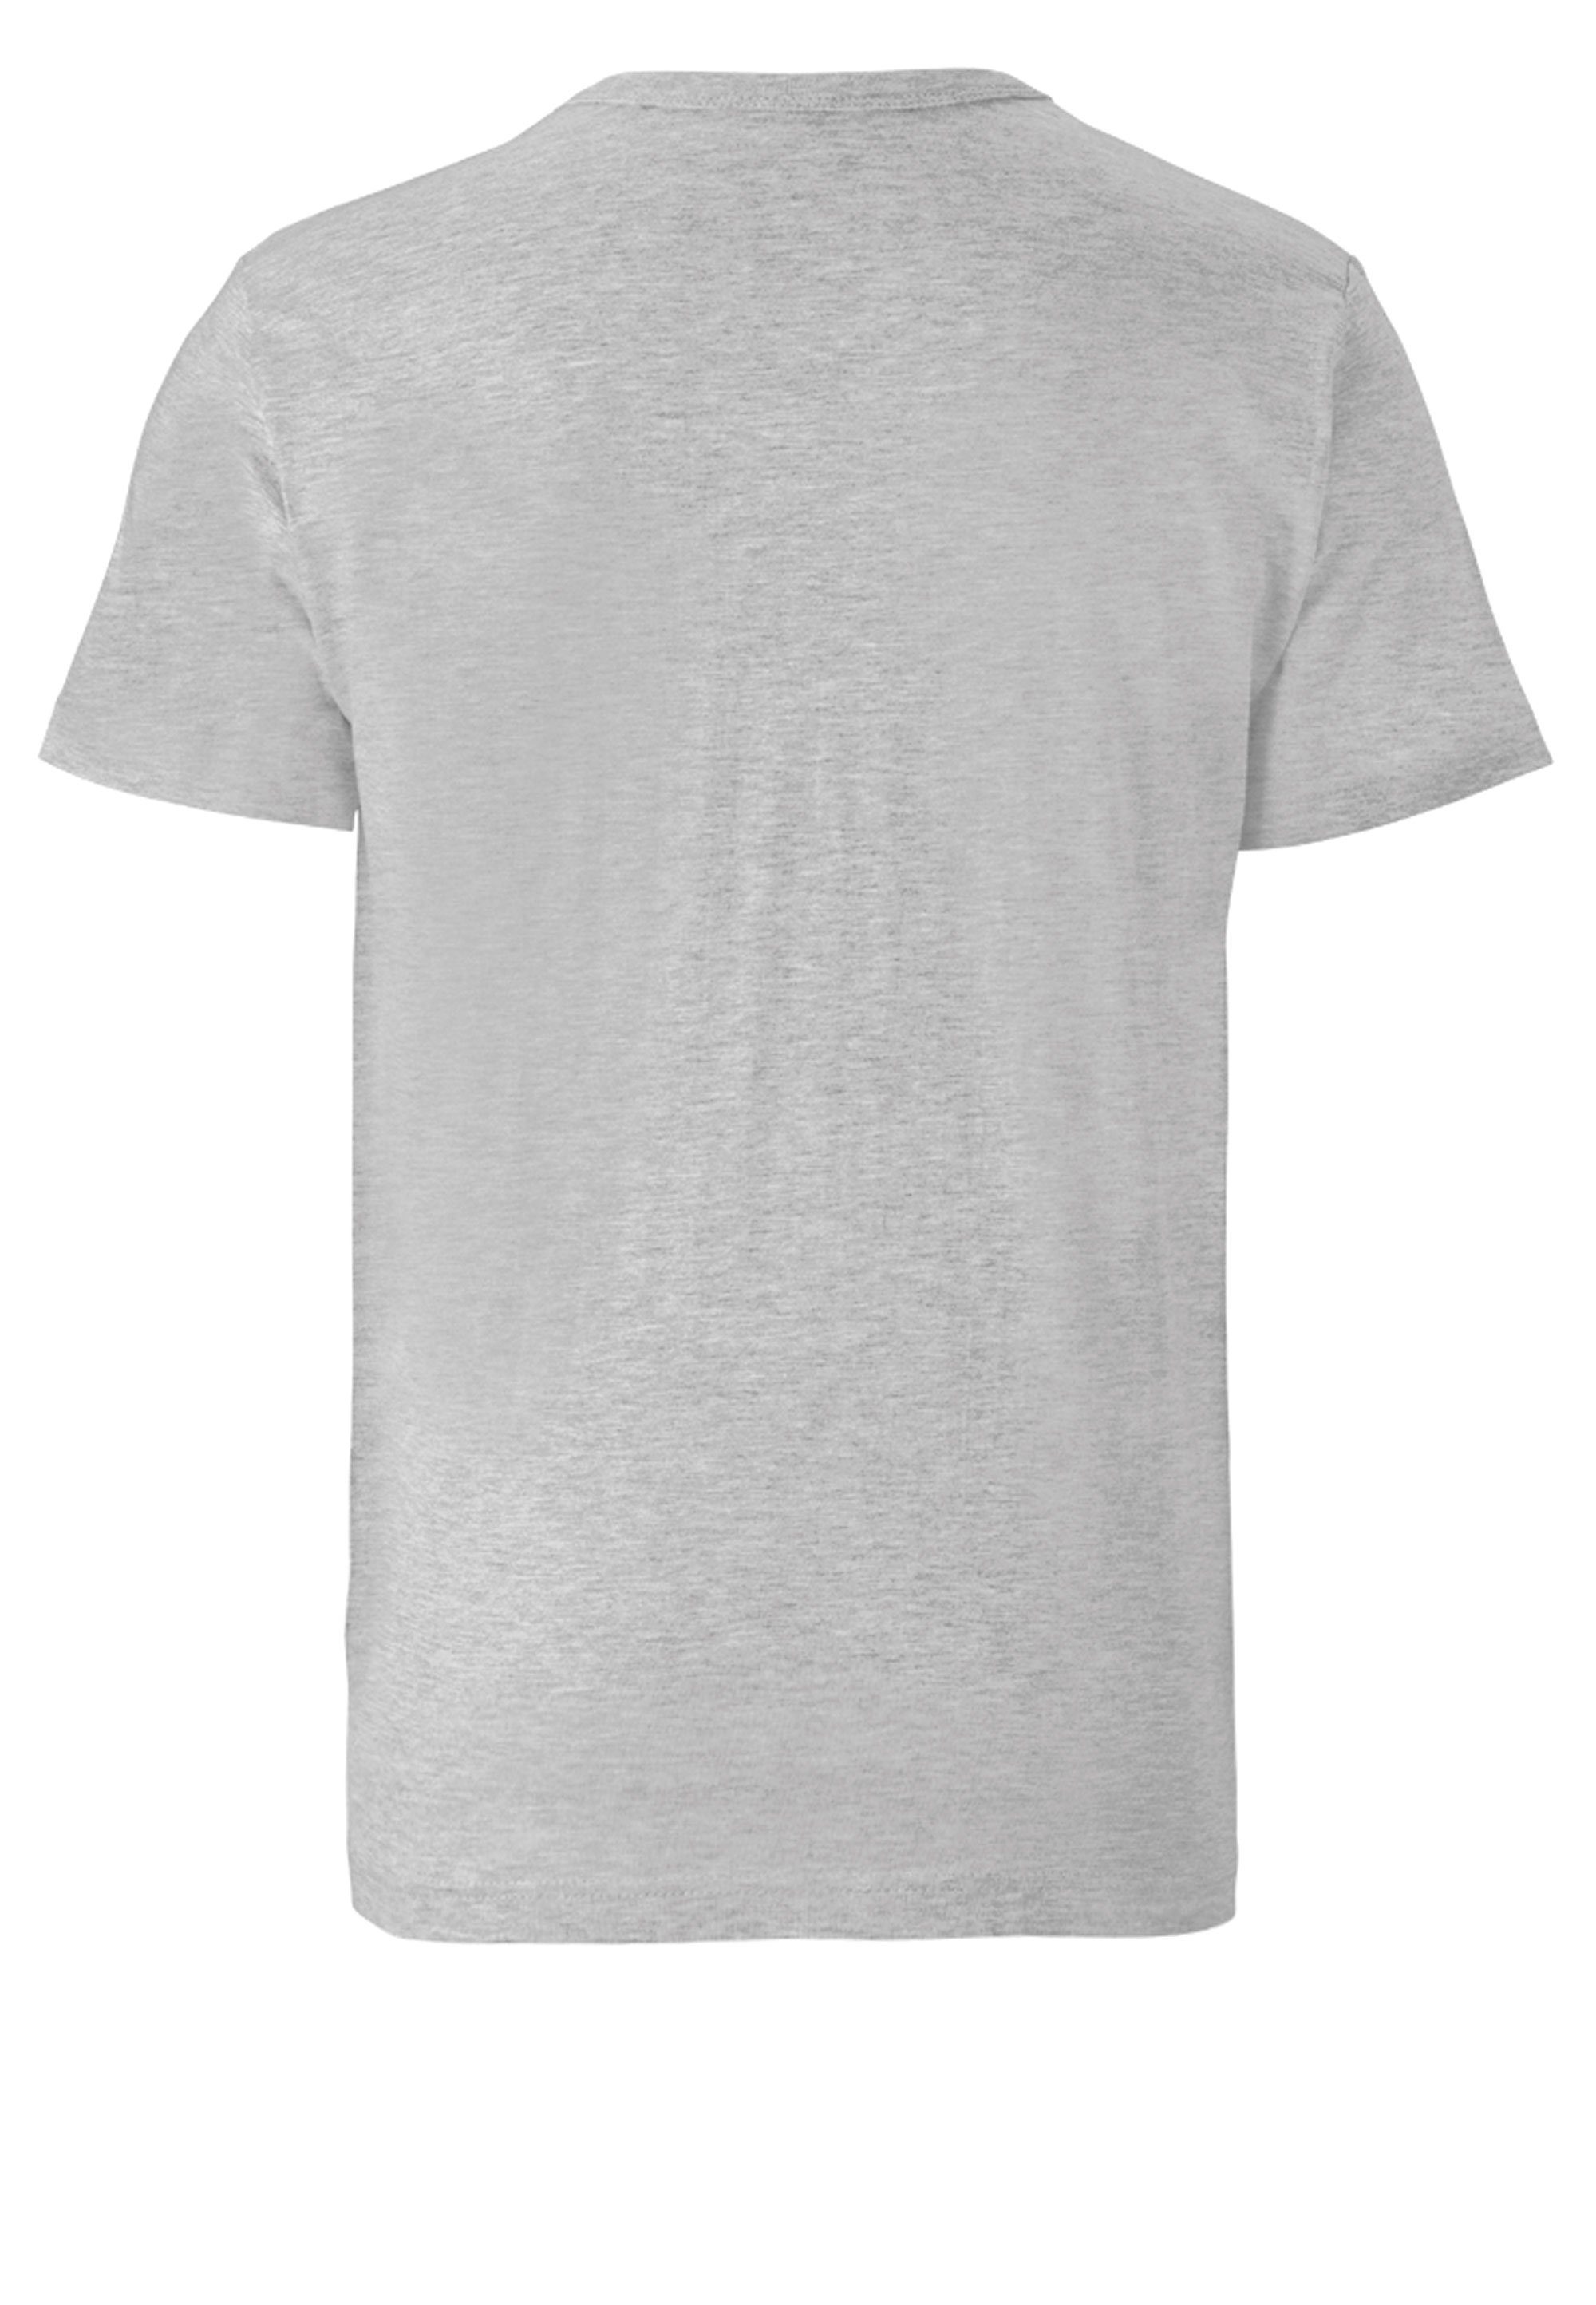 lizenziertem Krümelmonster LOGOSHIRT T-Shirt grau-meliert mit Sesamstrasse - Originalddesign